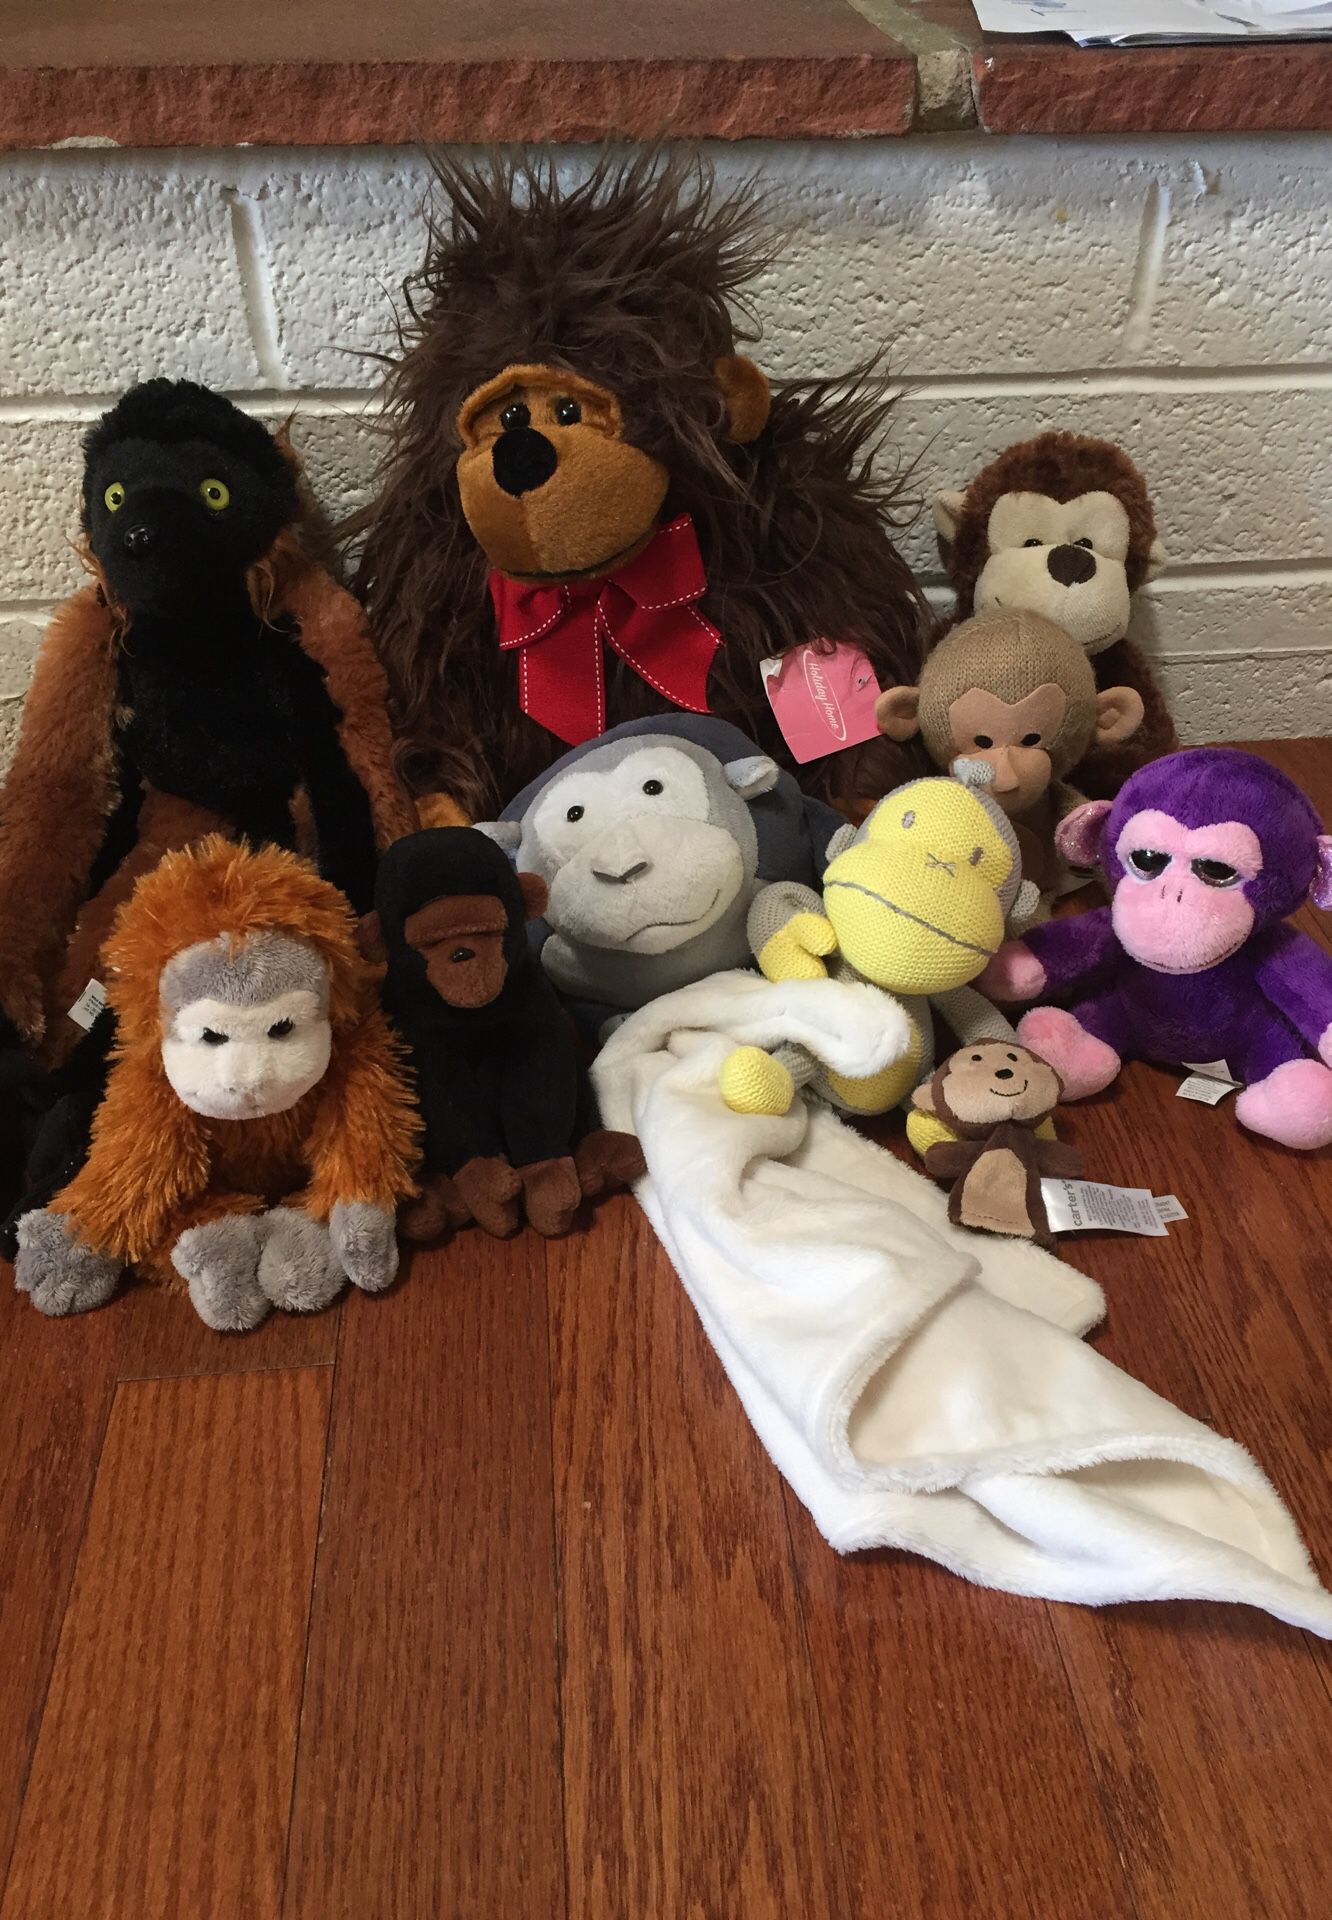 Lot of 10 monkeys apes stuffed animals Stuffies plush toys kids baby gorilla orangutan